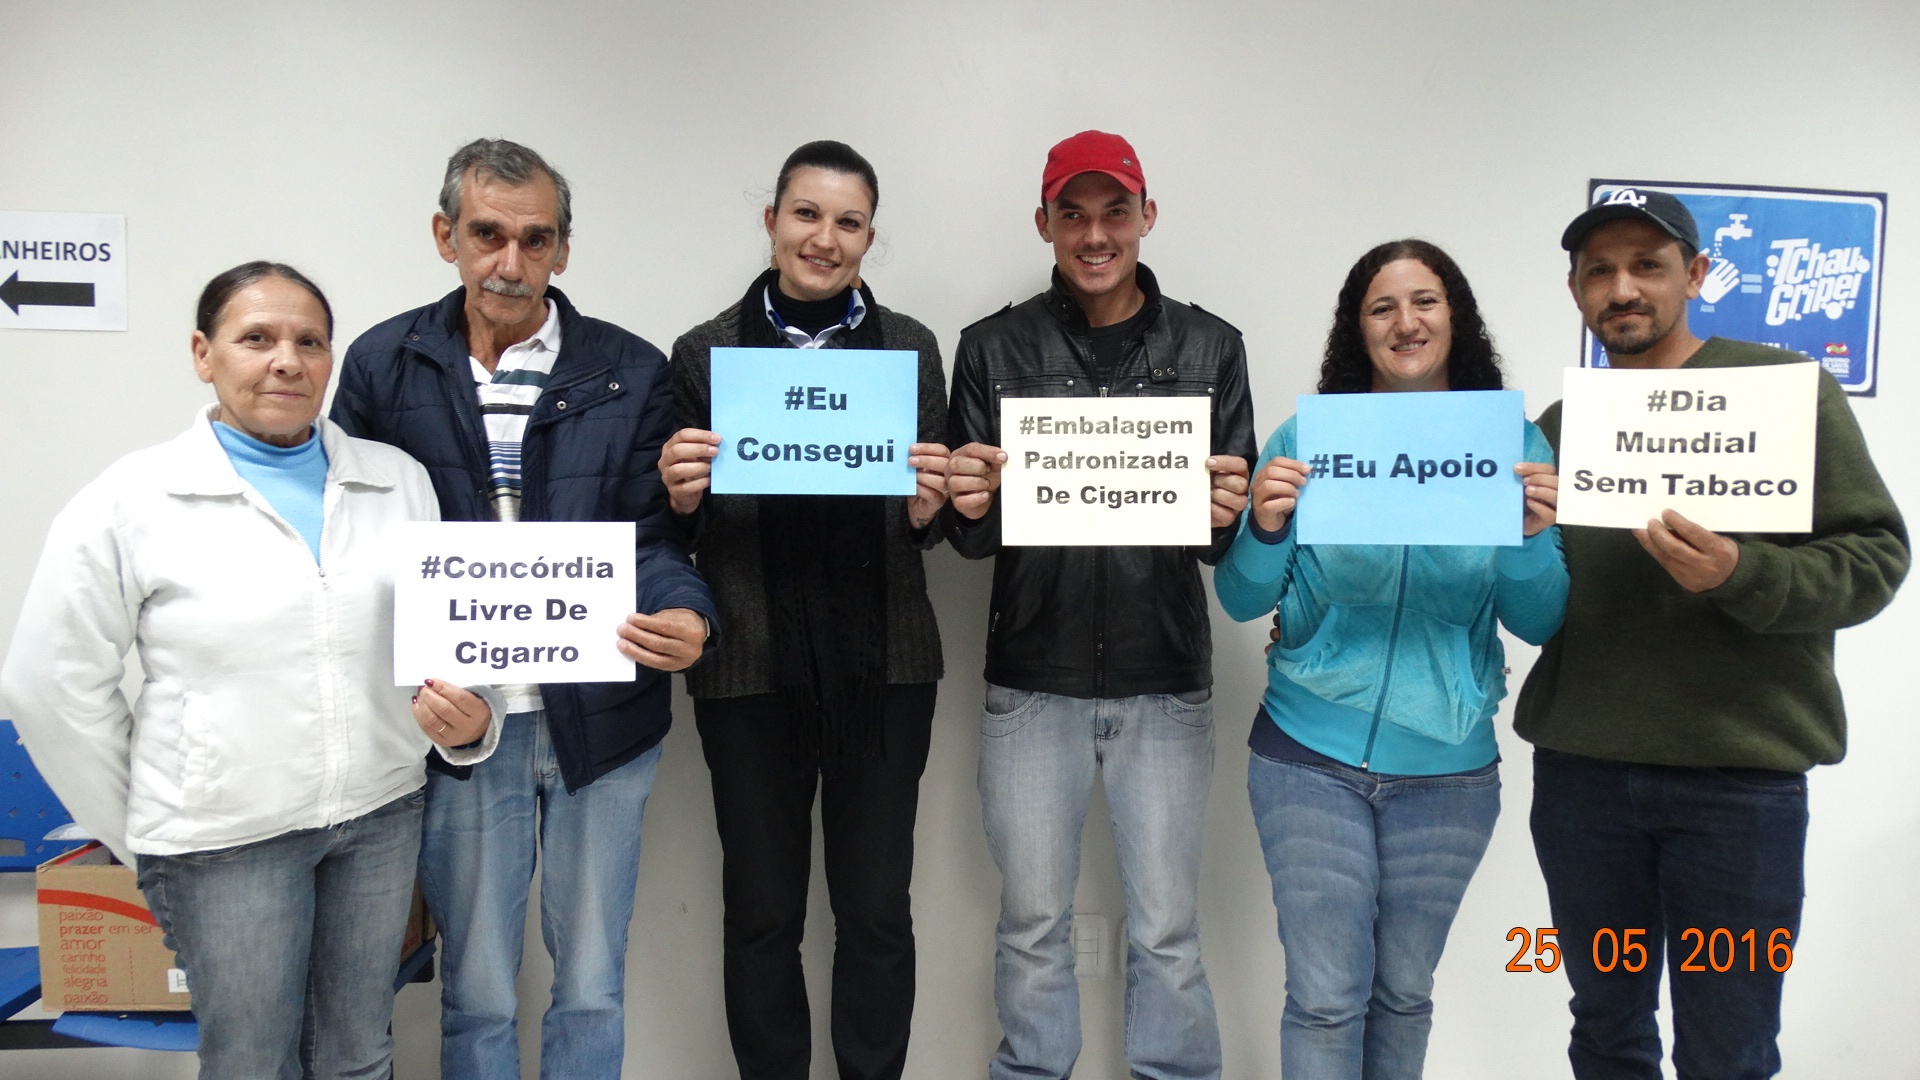 You are currently viewing Campanha nas redes sociais para combater o tabagismo